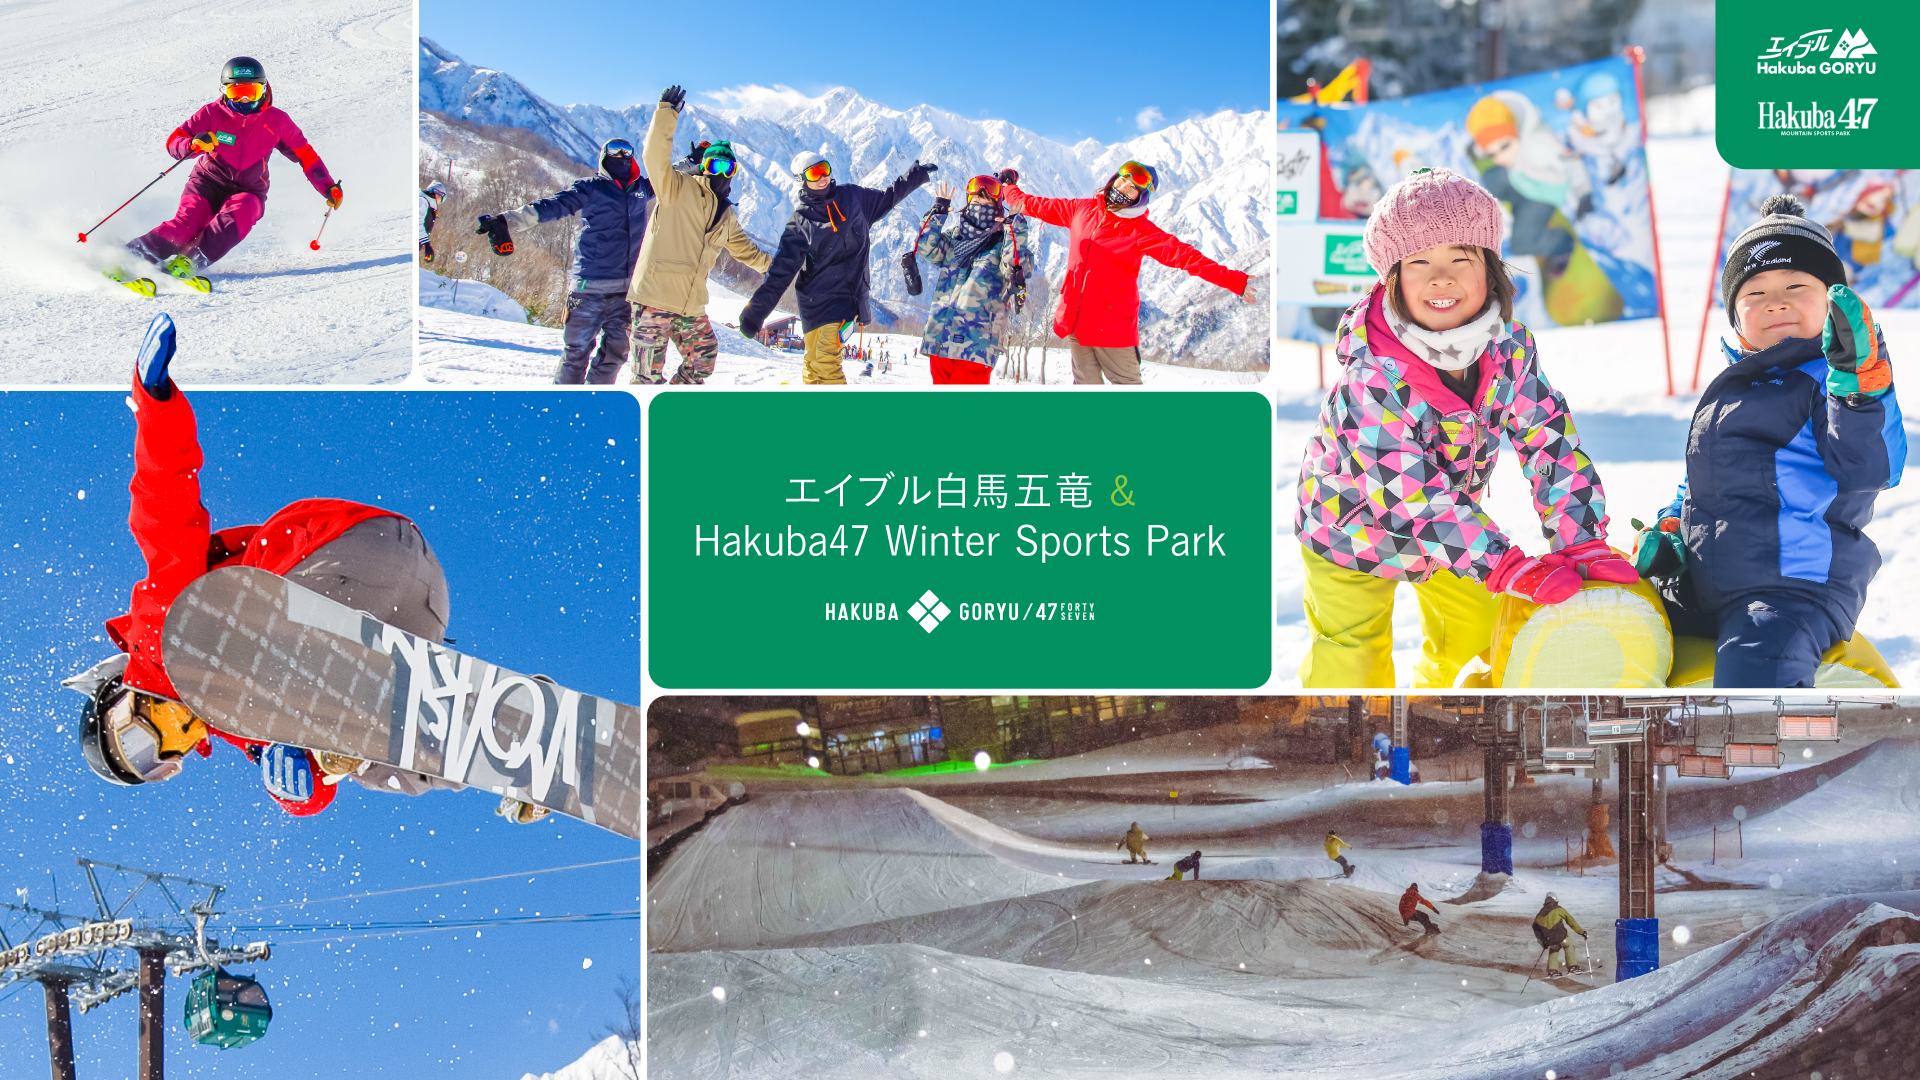 HAKUBA GORYU 47 ｜ エイブル白馬五竜 & Hakuba47 Winter Sports Park ｜